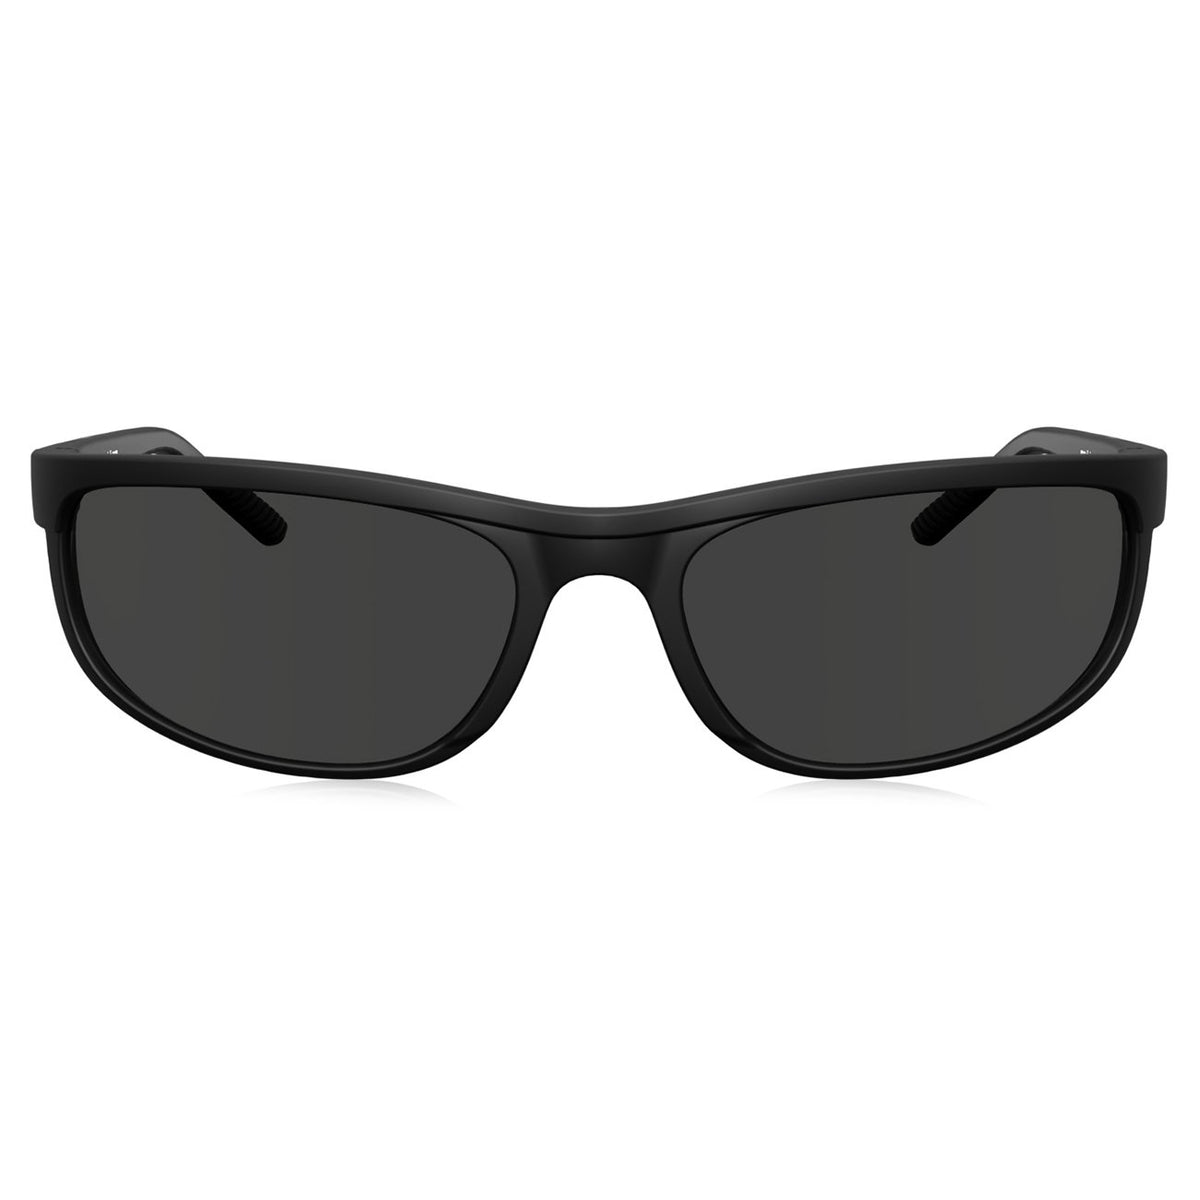 MAXJULI Polarized Sunglasses Men Women,UV400 Protection Rectangular Sun ...